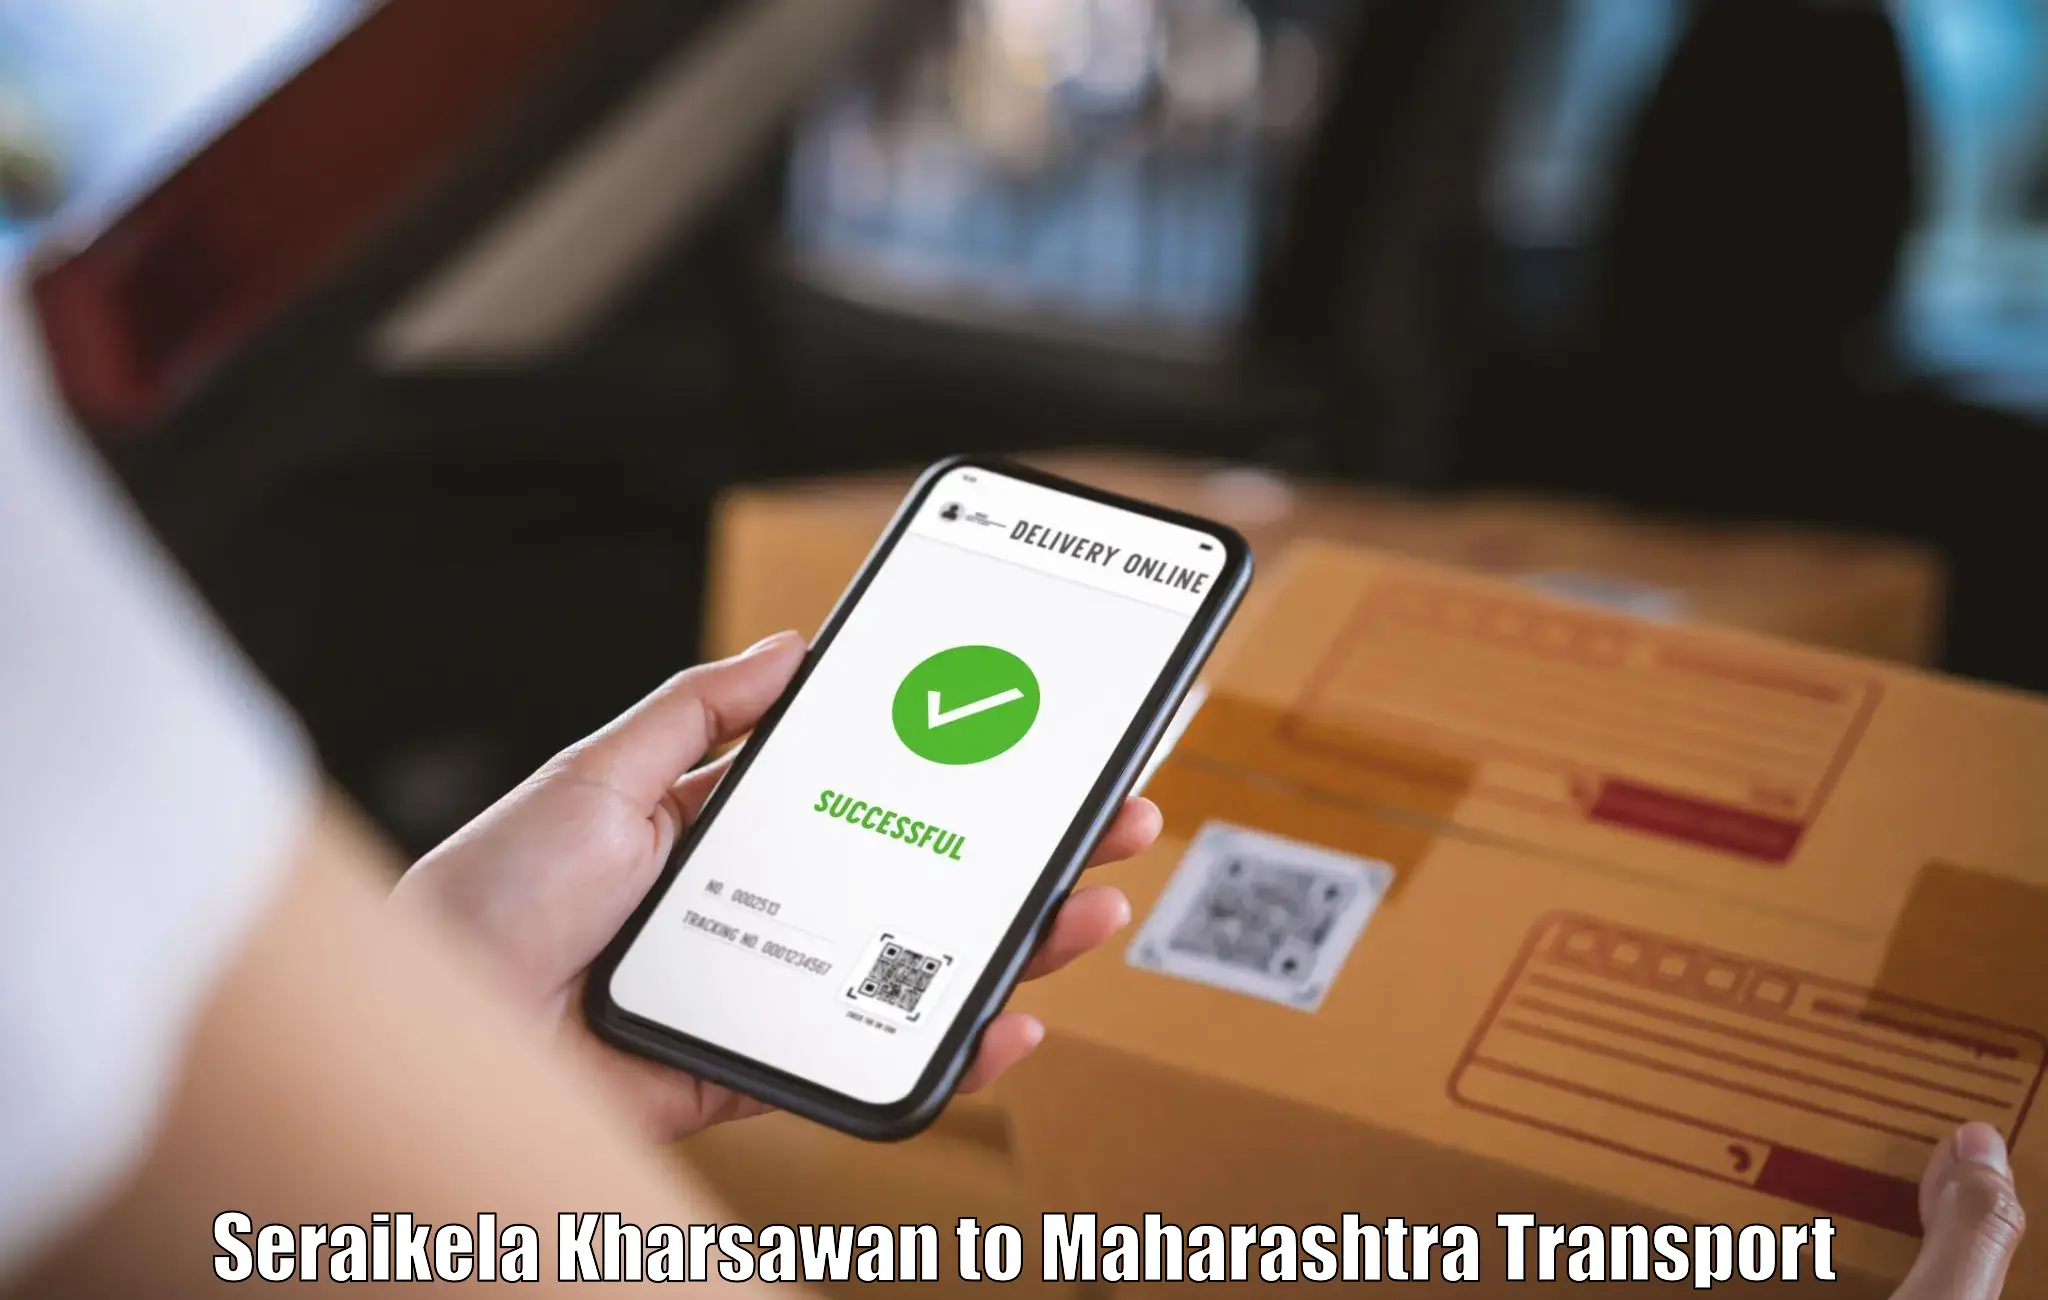 Daily transport service Seraikela Kharsawan to Khandala Pune